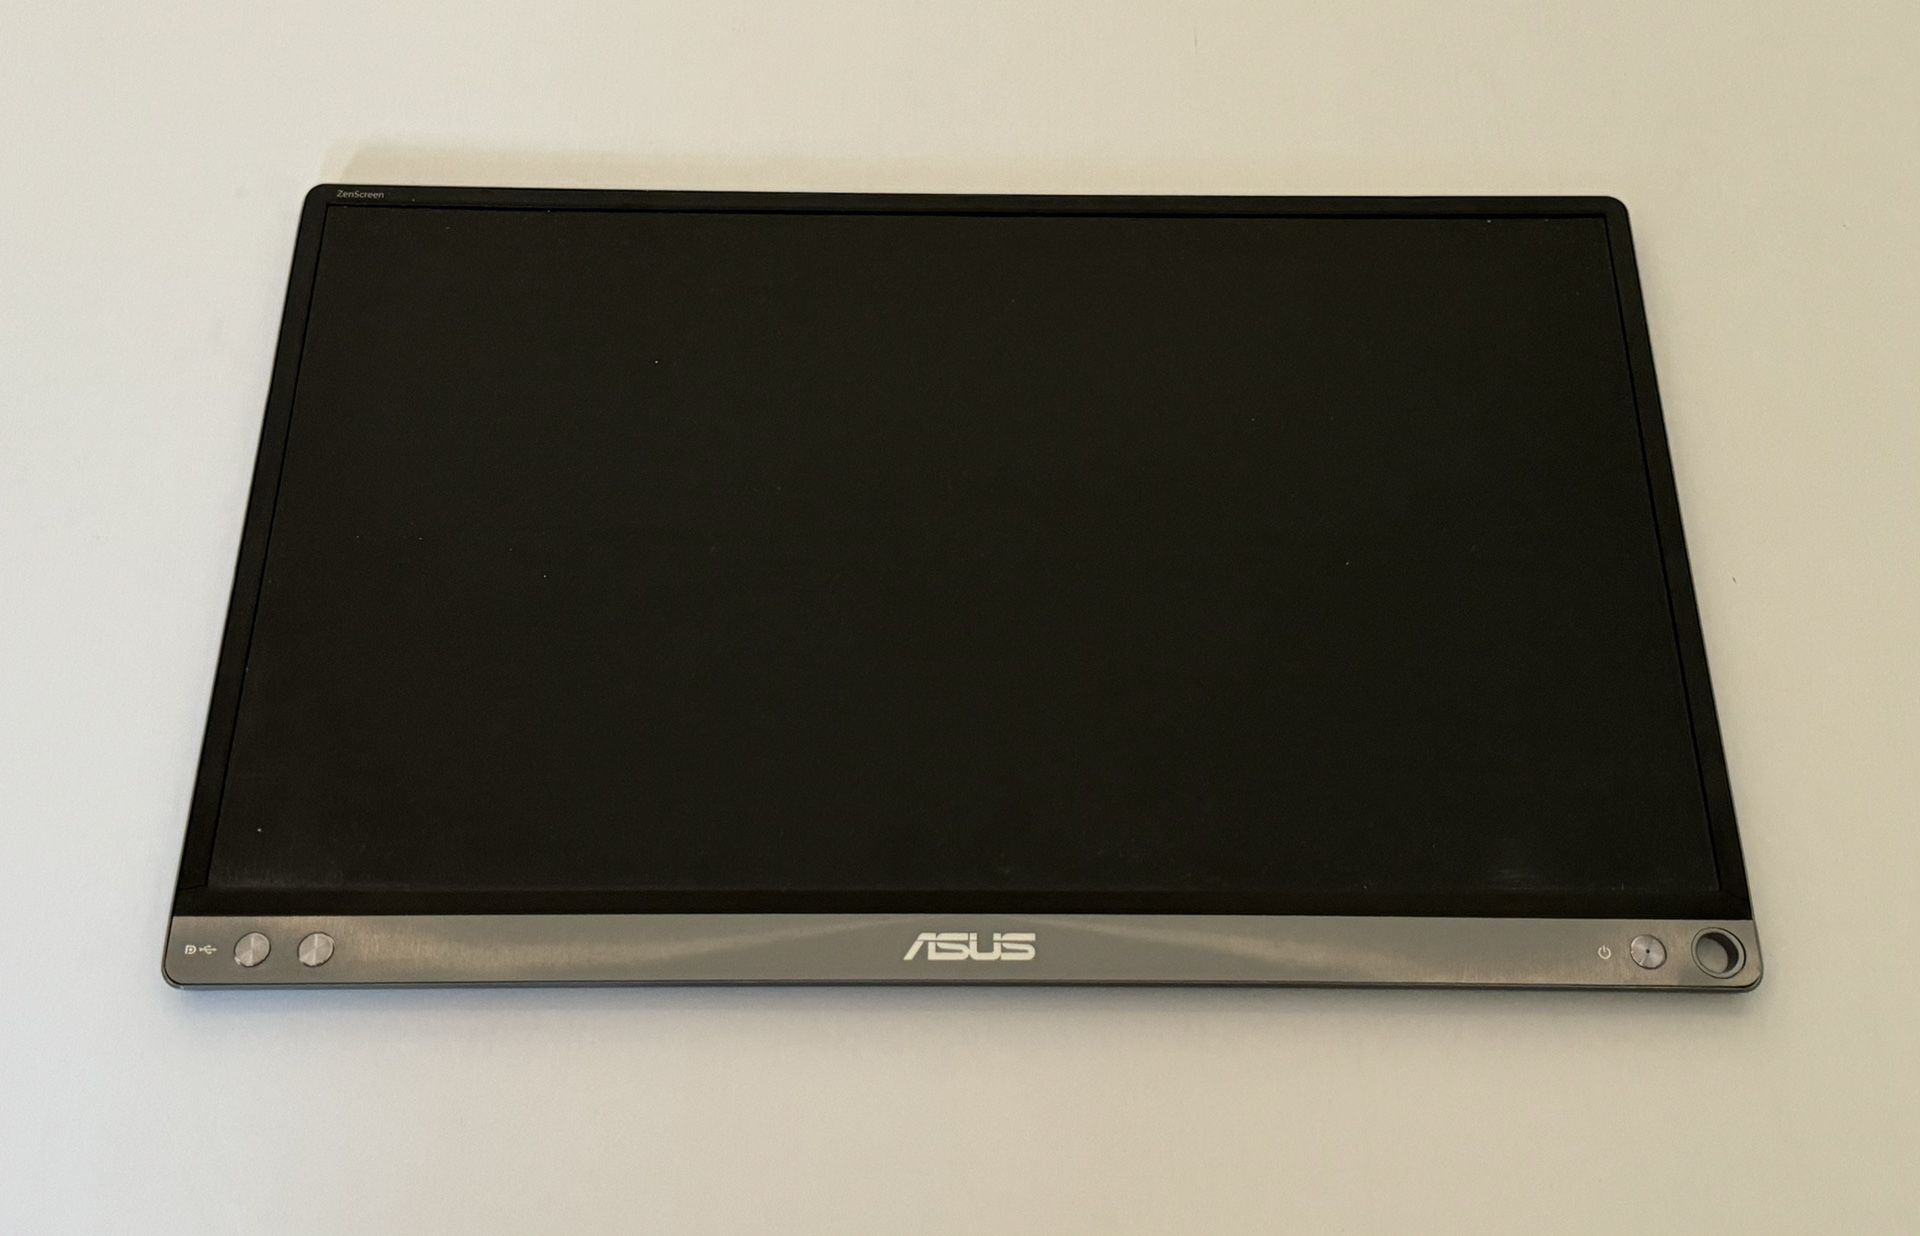 ASUS ZenScreen 15.6” Portable USB Monitor, Full HD, External Screen For Laptop, USB-C Type, Black